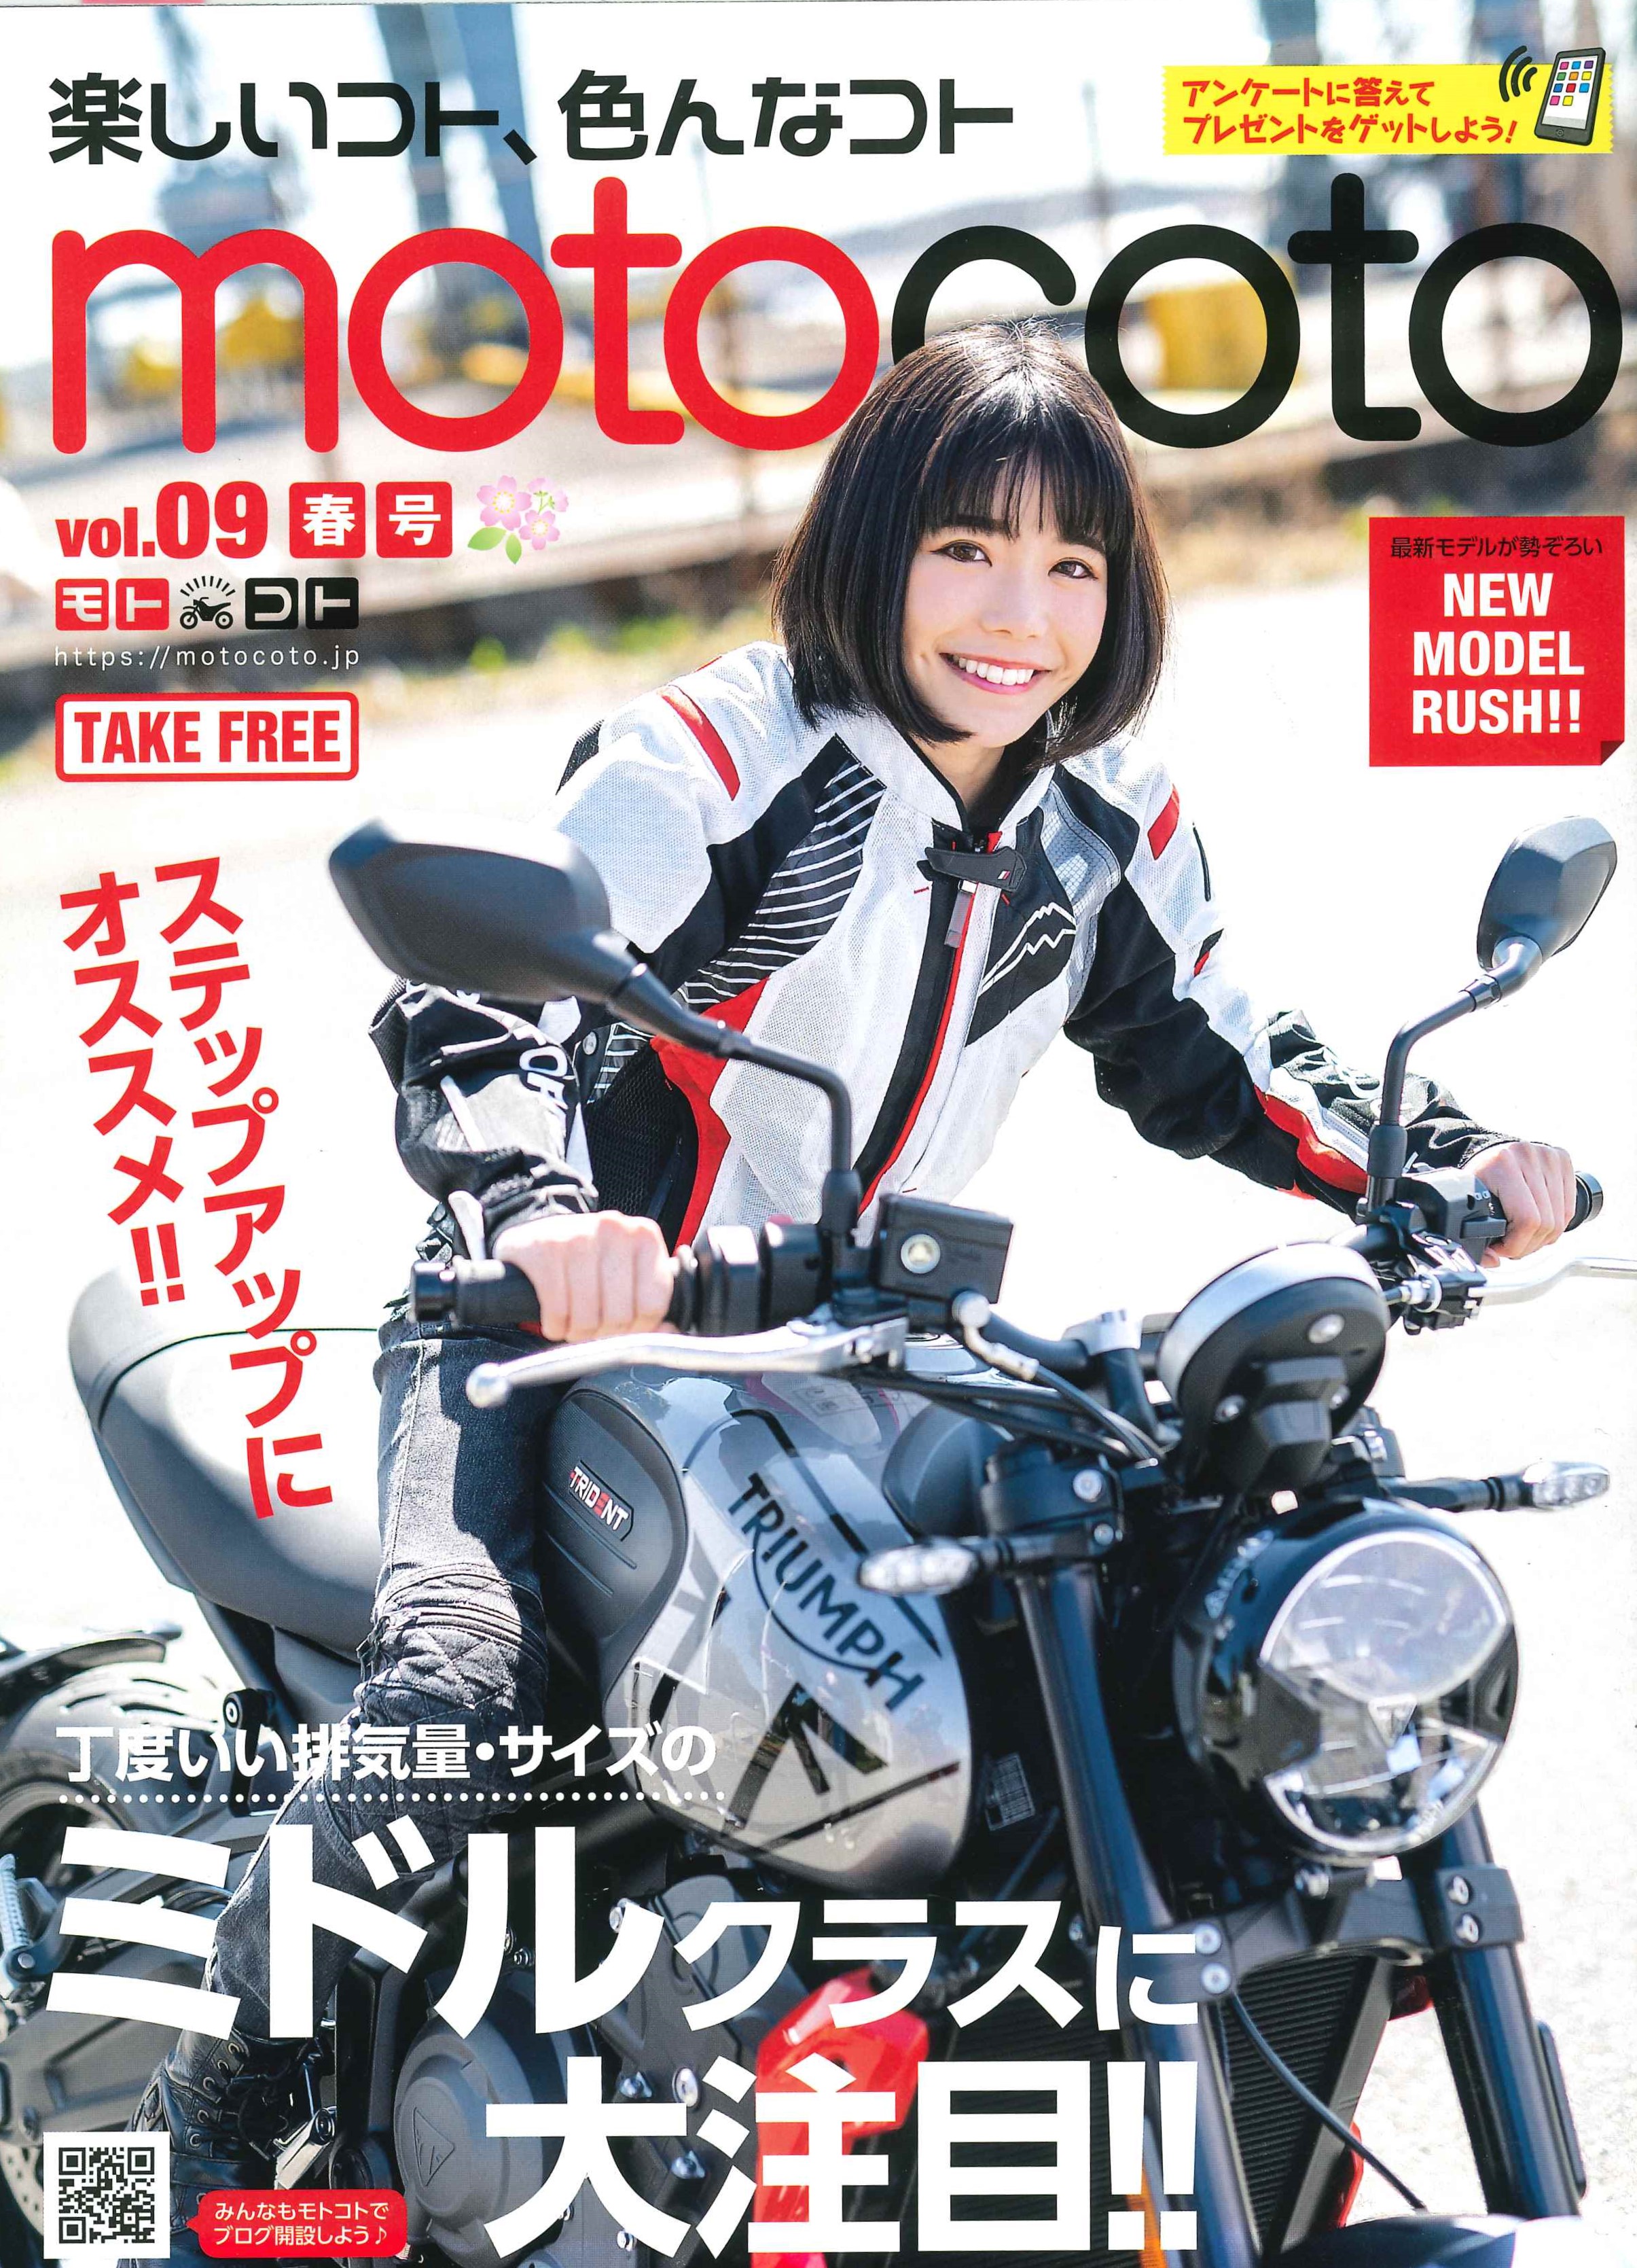 【motocoto vol.9掲載】バイク用インカム「B+COM ONE」